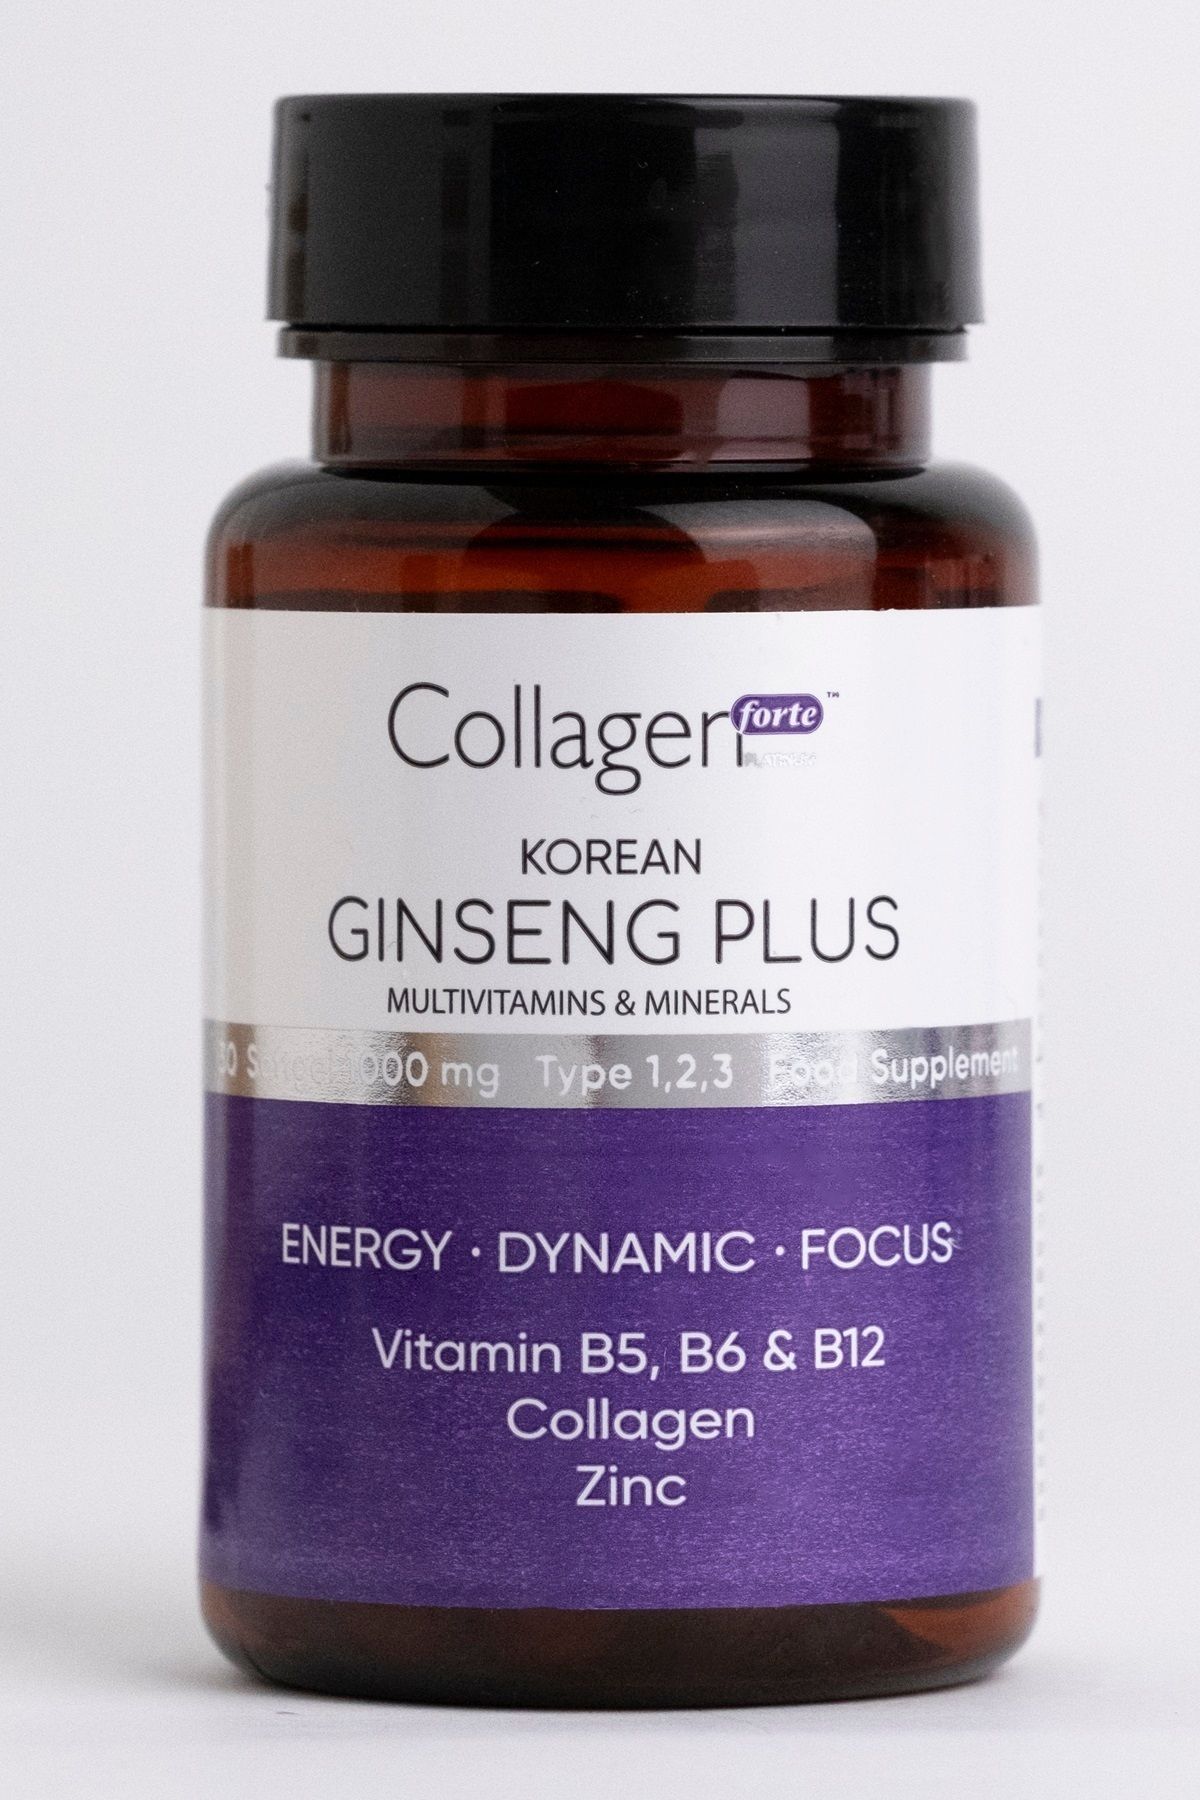 Collagen Forte Platinum Kırmızı Kore Ginseng Plus, Hidrolize Kolajen, Vitamin B5,b6,b12 & Çinko, Softgel 1000mg